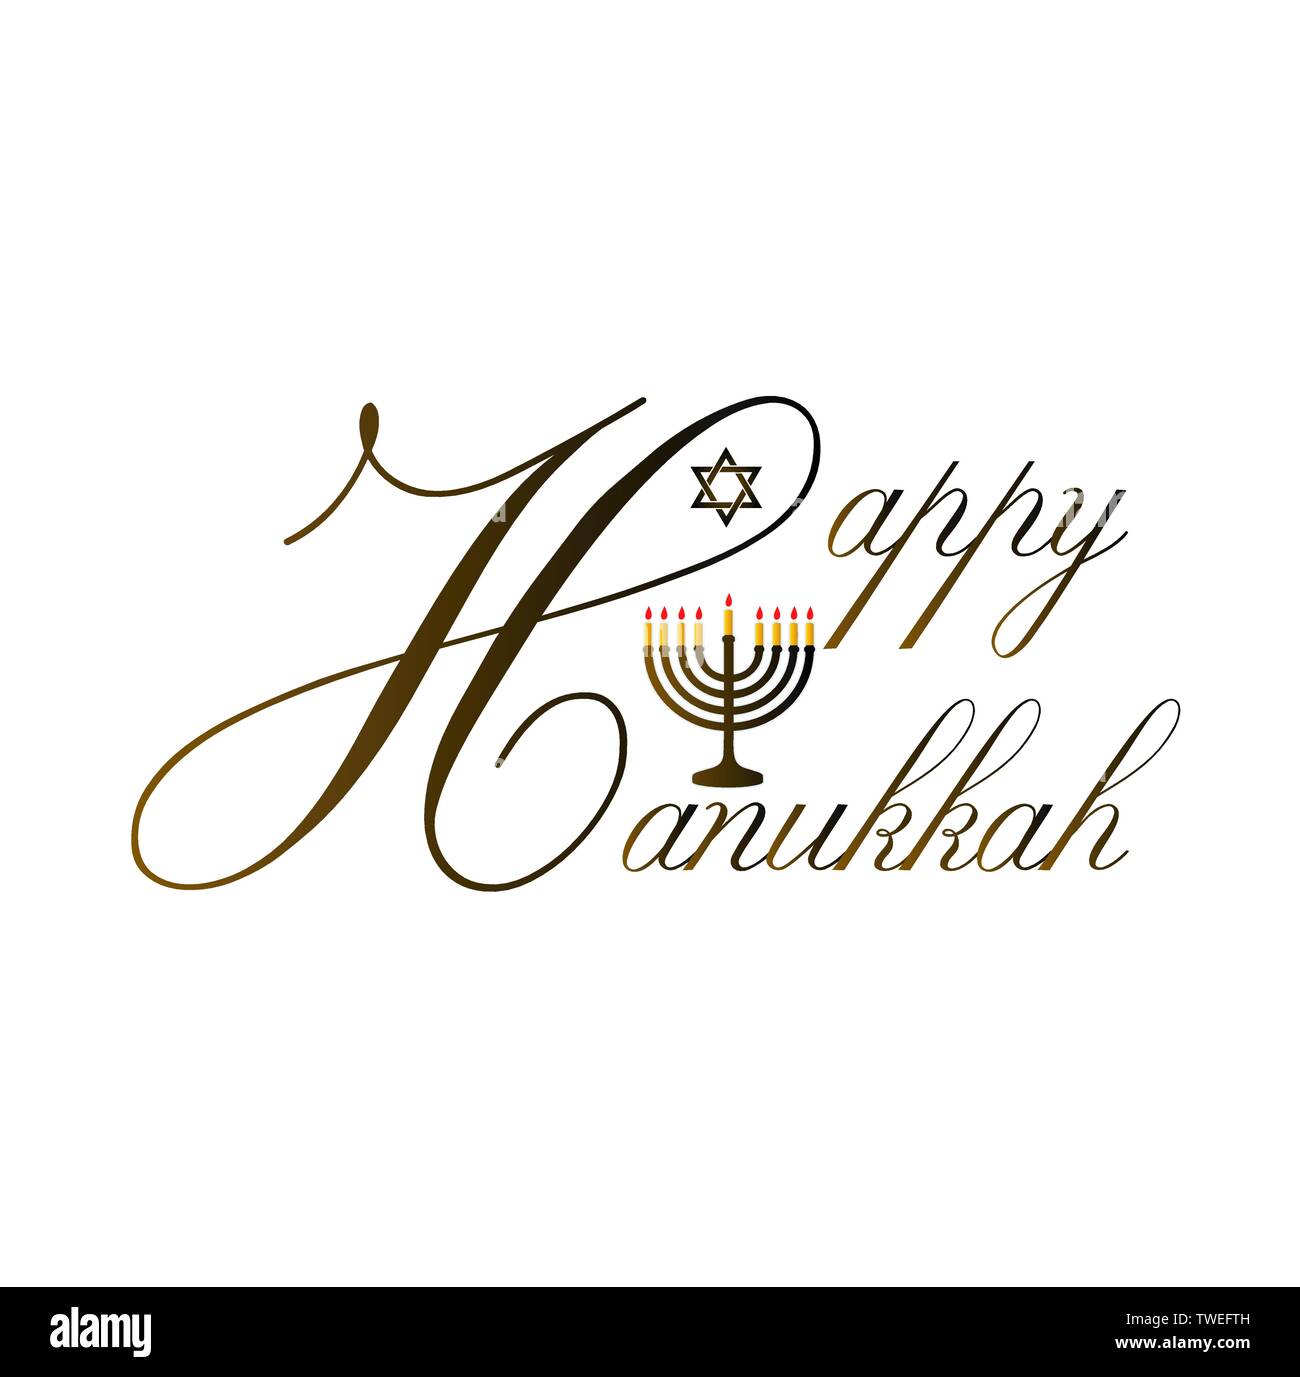 Happy Hanukkah poster- Jewish holiday celebration with star of David symbol Stock Vector